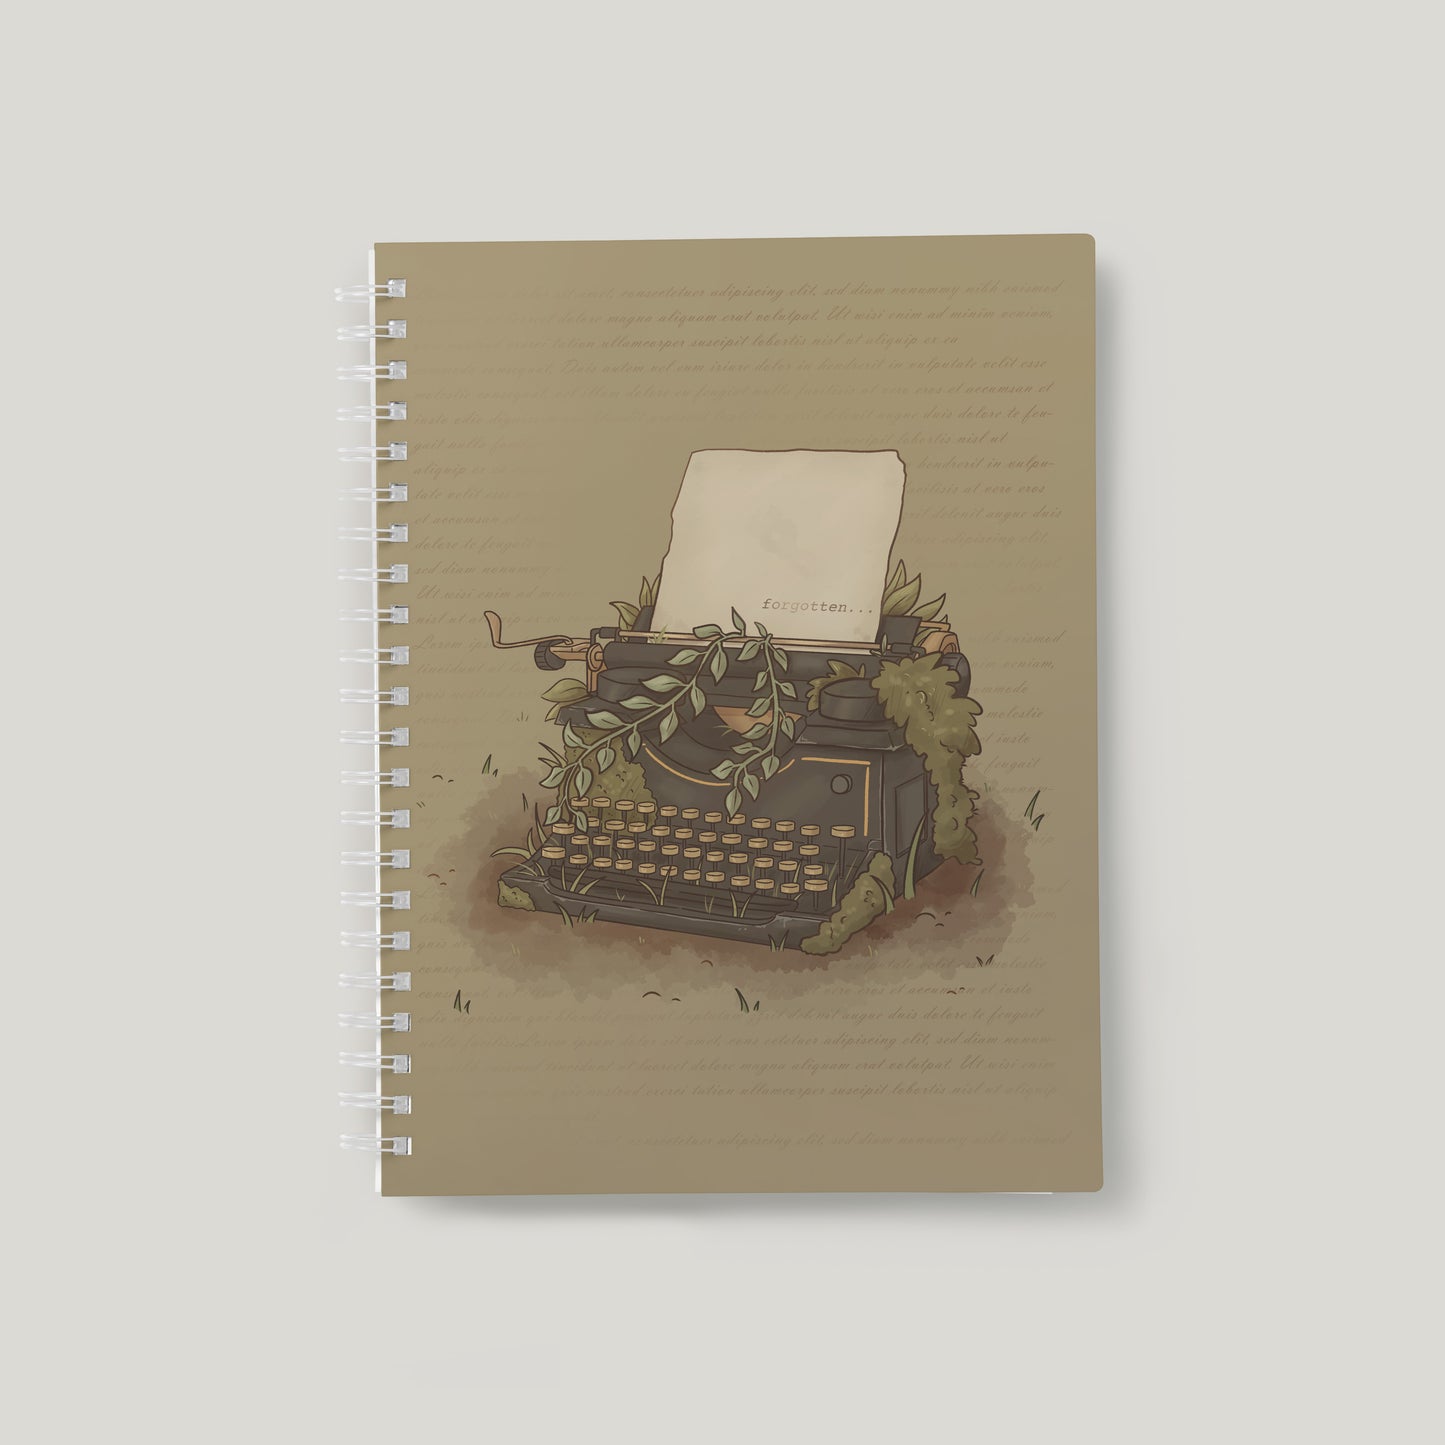 The Forgotten Typewriter - A5 Notebook